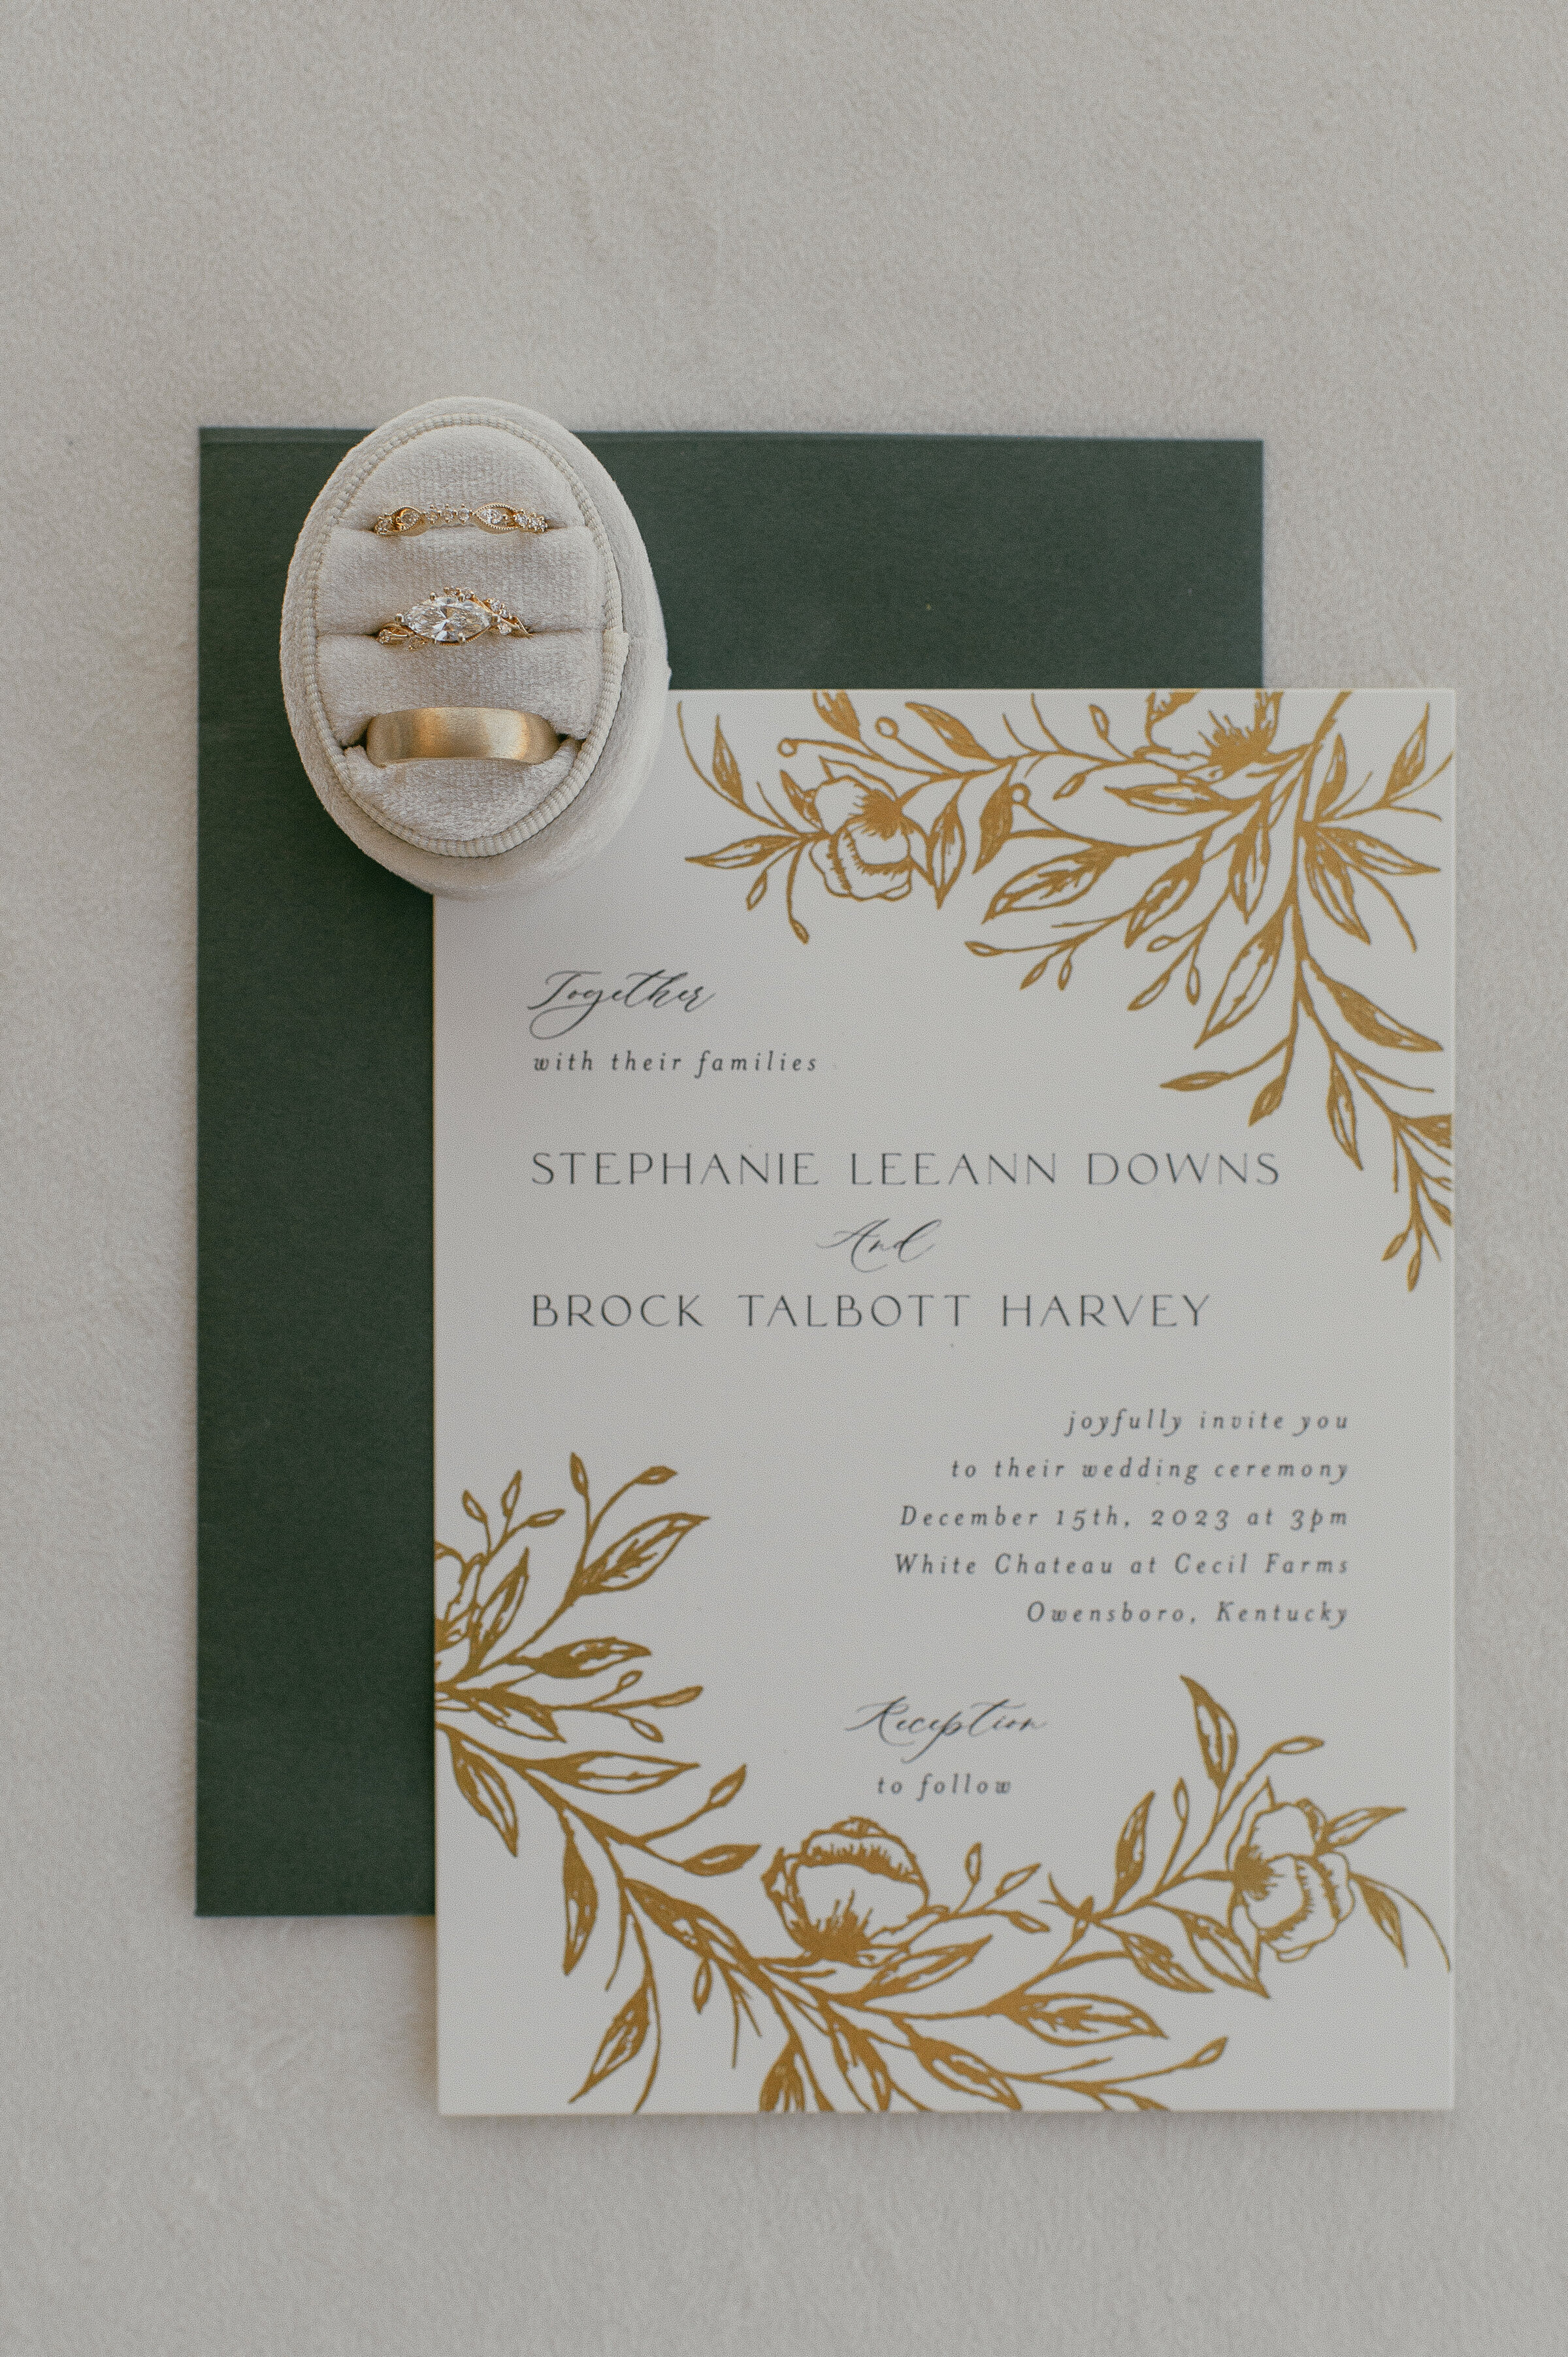 Wedding invitation card with gold leaf design and green envelope